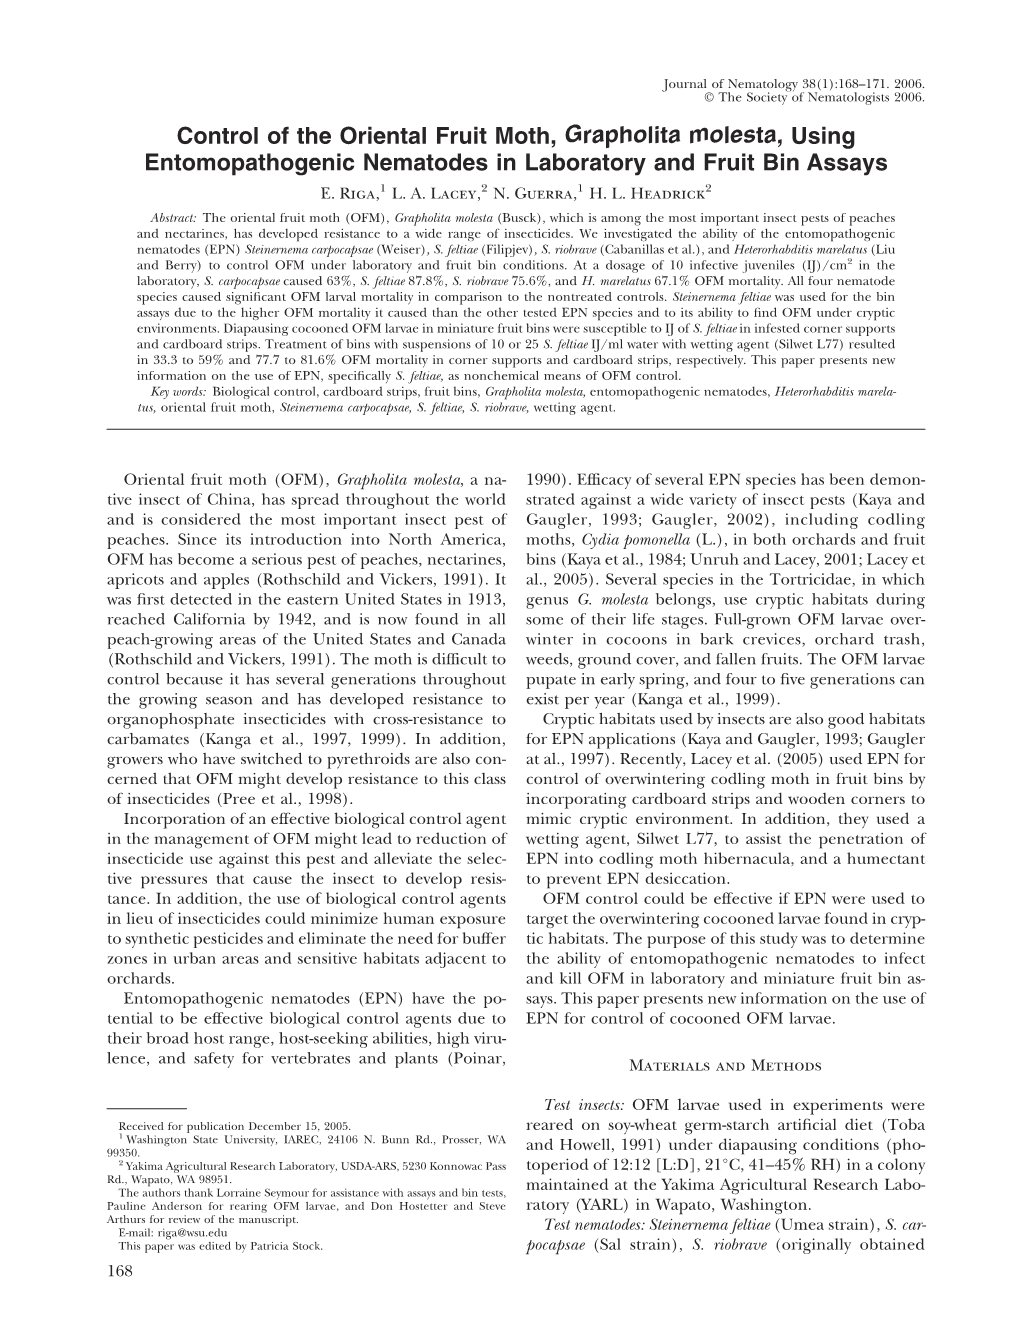 Control of the Oriental Fruit Moth, Grapholita Molesta, Using Entomopathogenic Nematodes in Laboratory and Fruit Bin Assays E